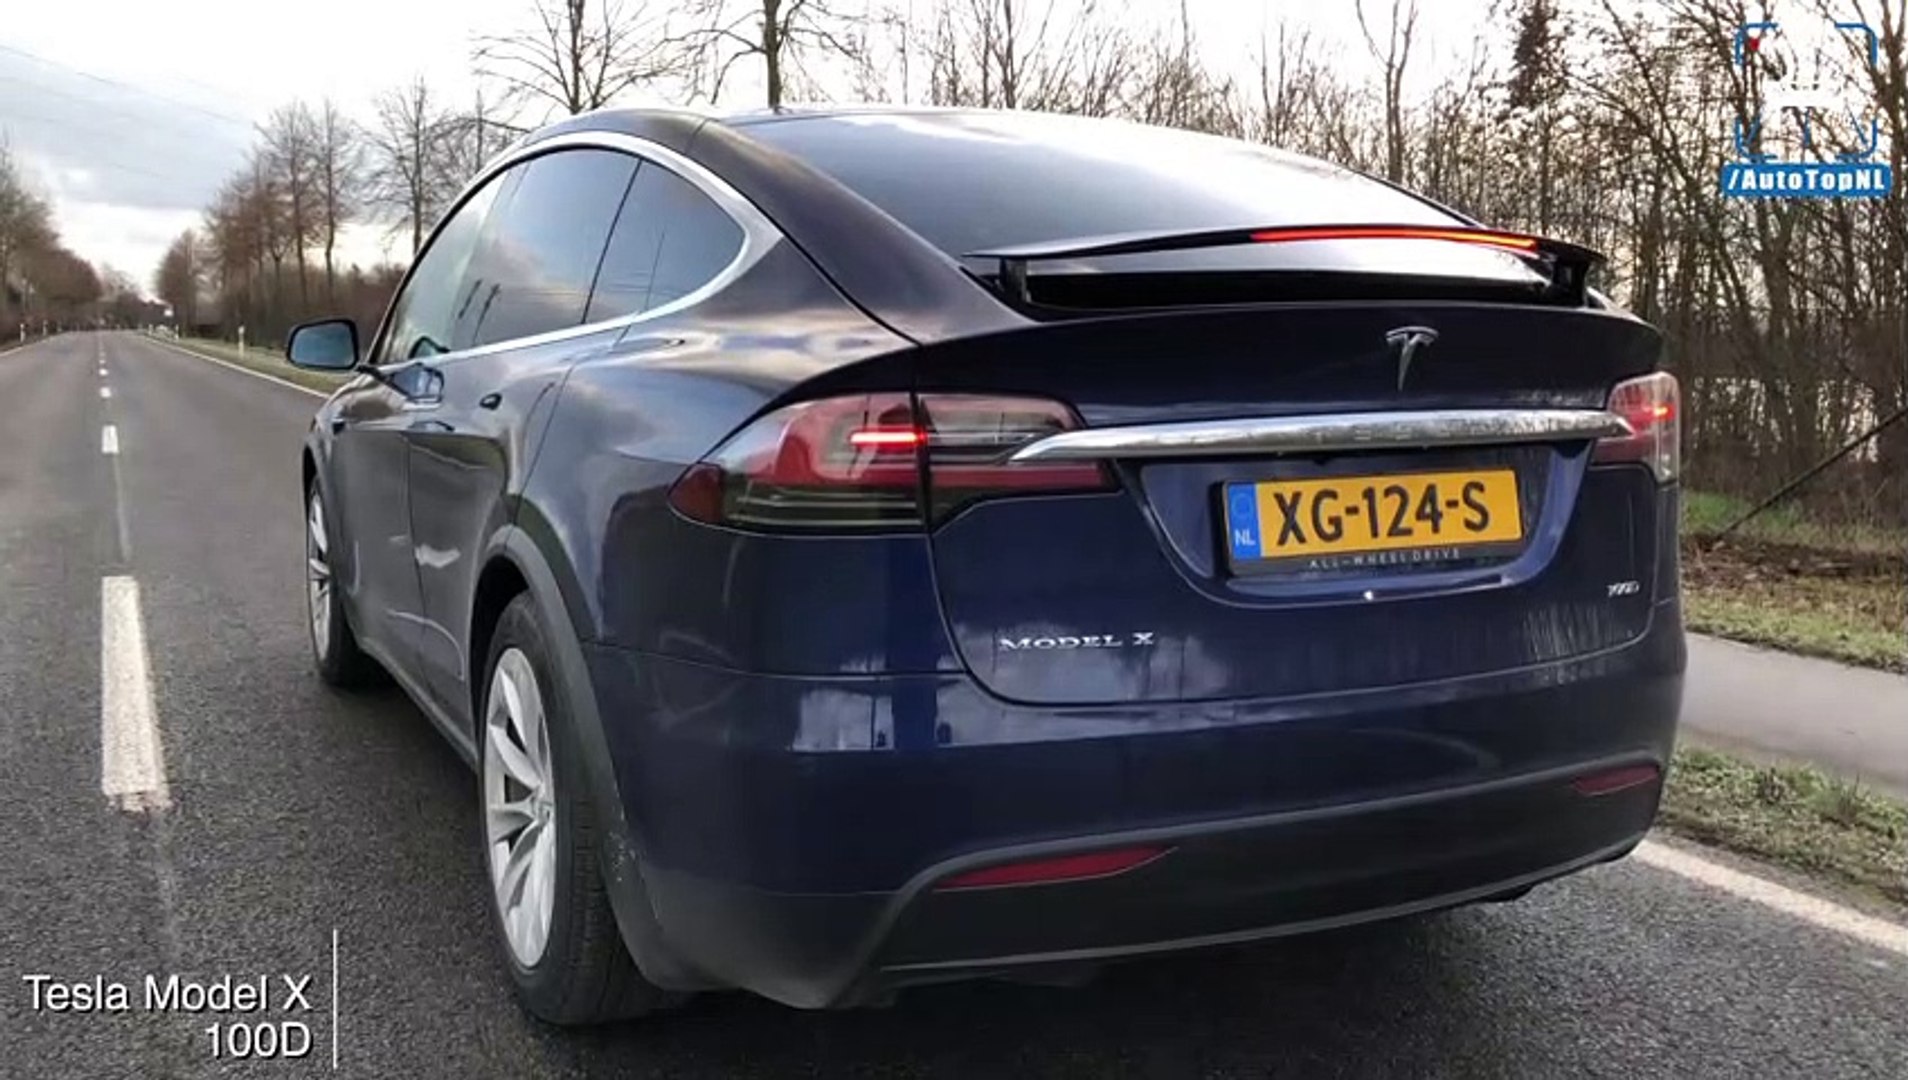 2019 Tesla Model X 100D 0-240km/h ACCELERATION by AutoTopNL